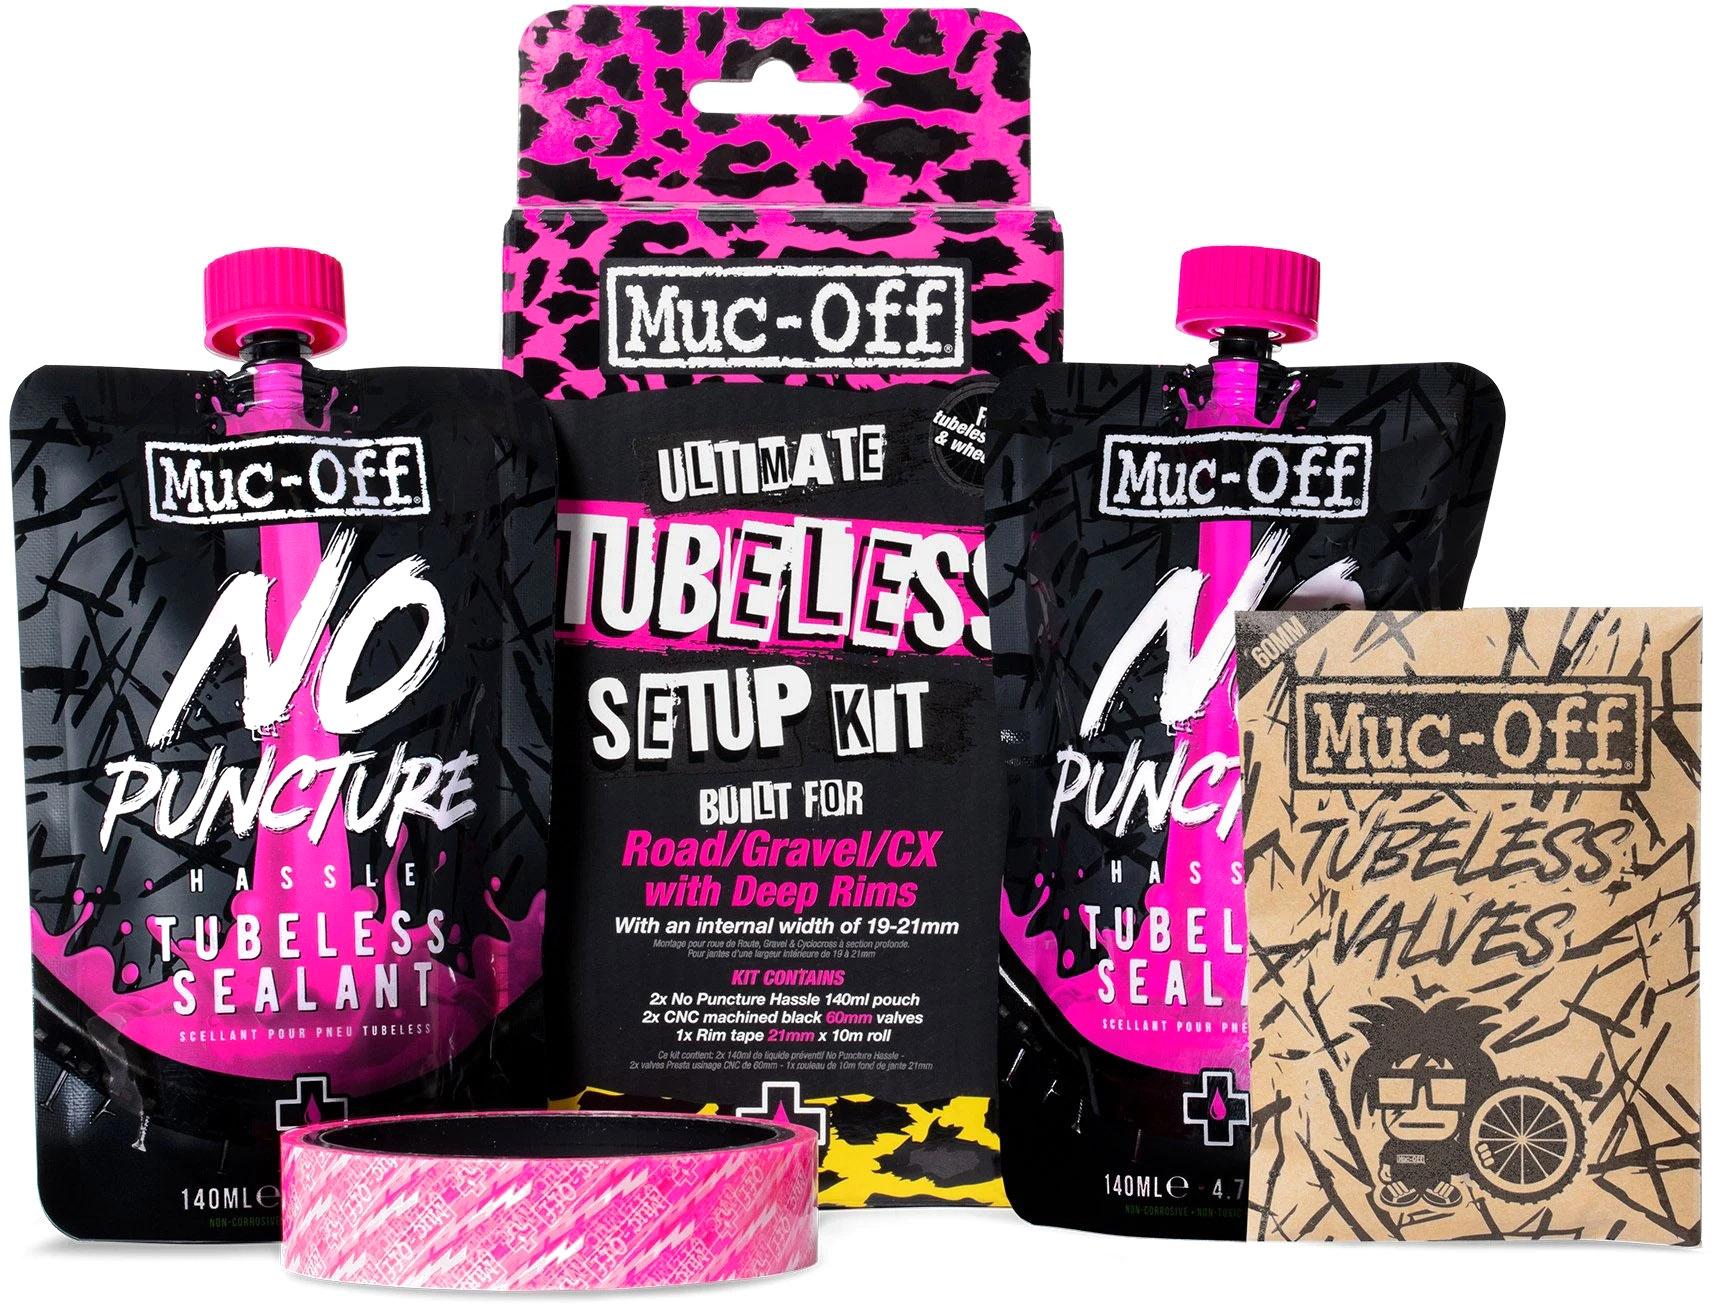 Muc-off Ultimate Tubeless Dh/trail/enduro Setup Kit - Black/pink